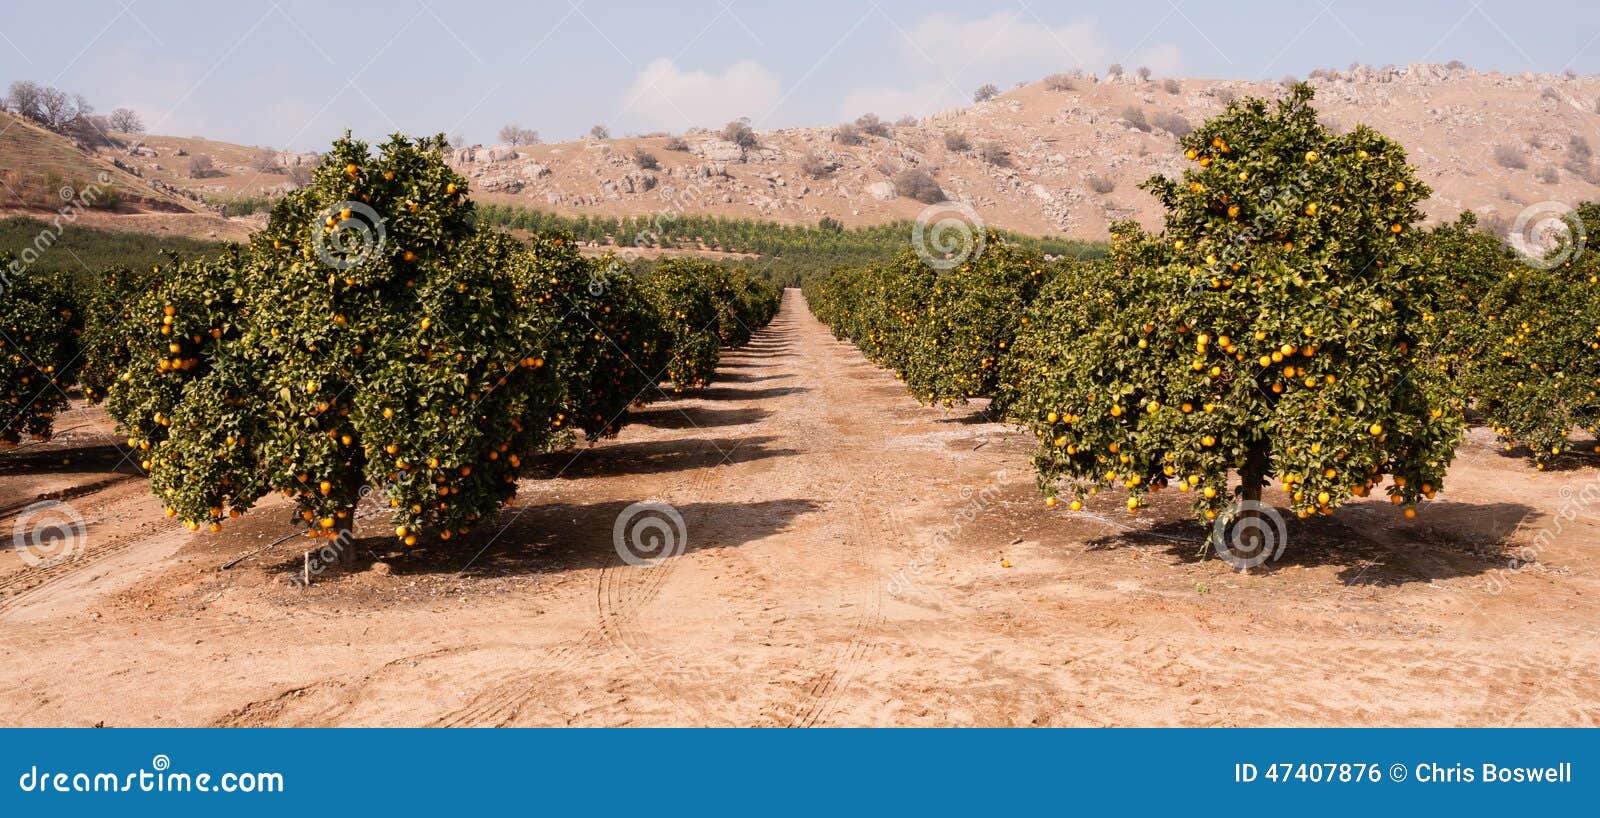 raw food fruit oranges ripening agriculture farm orange grove